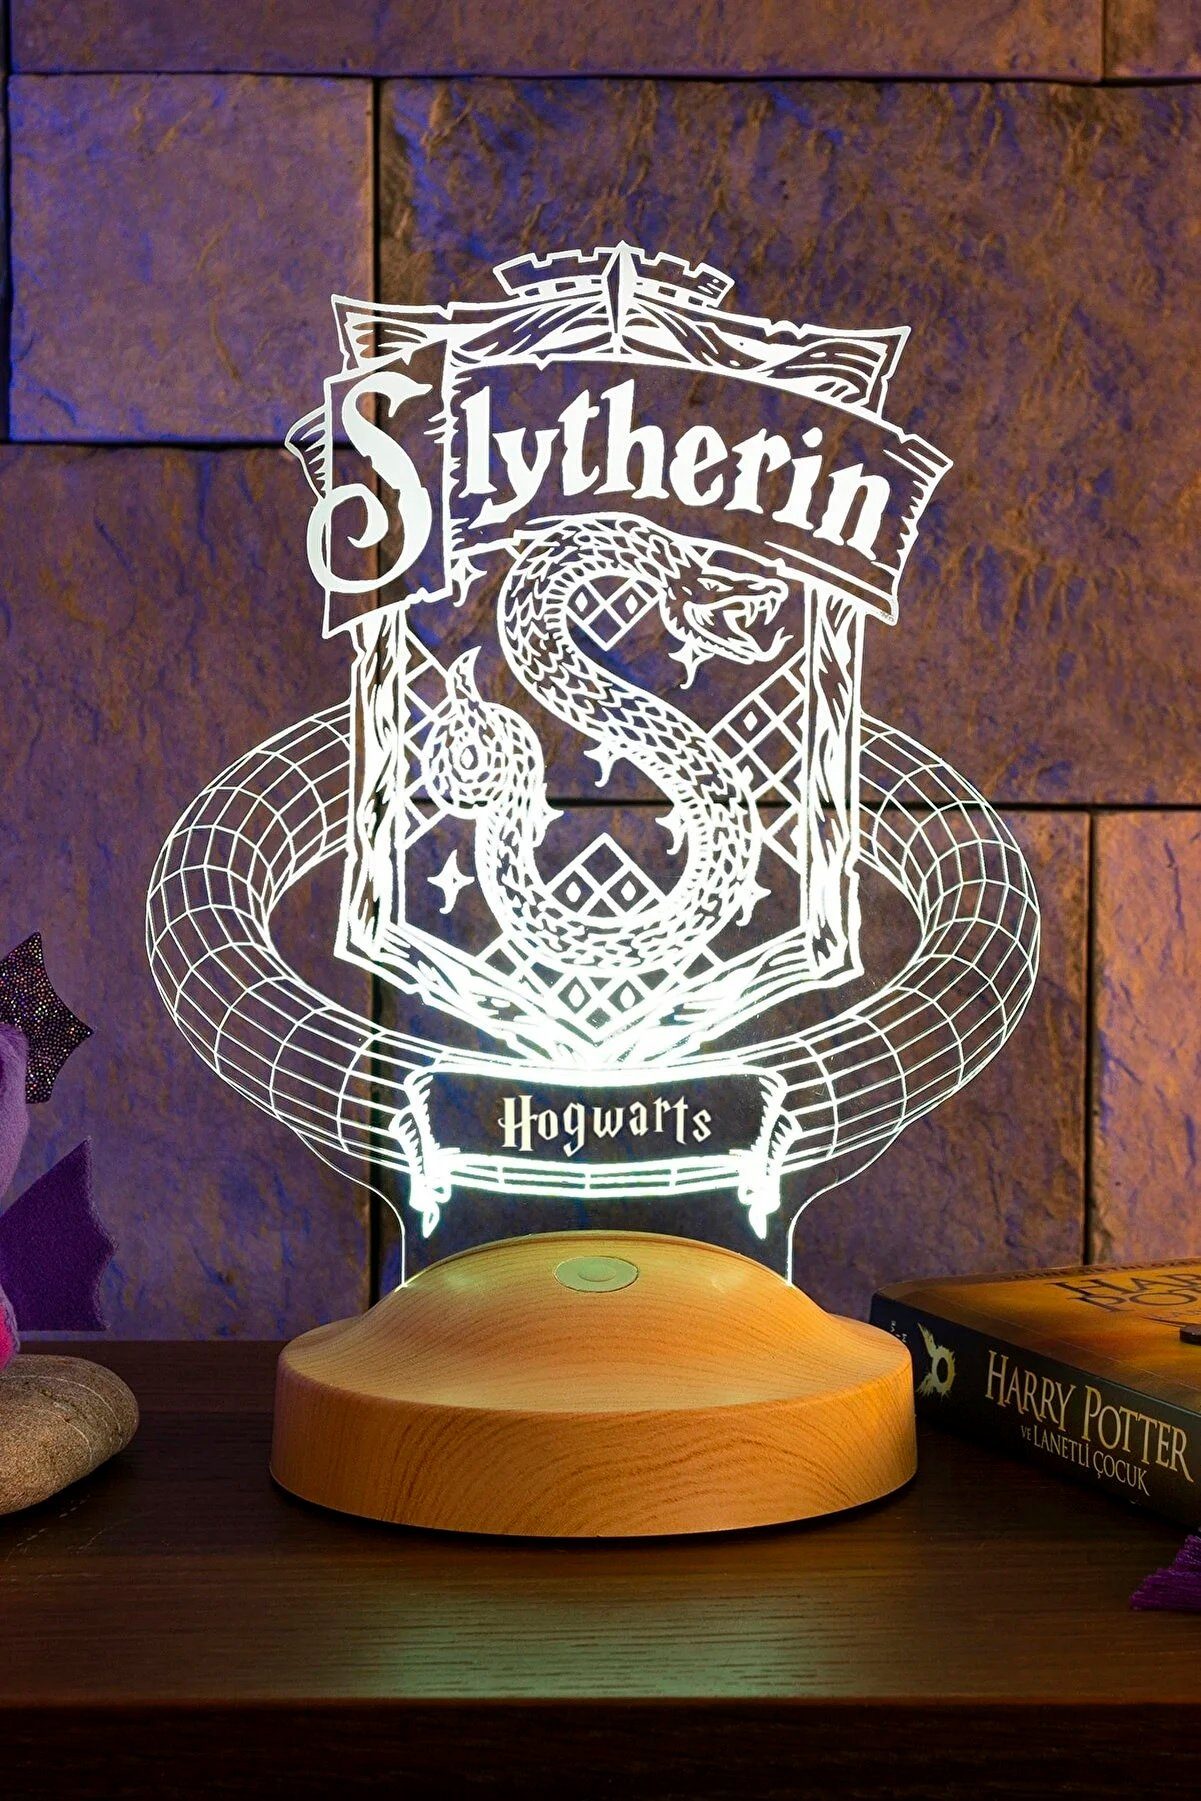 Geschenkelampe LED Nachttischlampe Slytherin Hogwarts Harry Potter LED-Nachtlicht Geschenke Lampe, LED fest integriert, Mehrfarbig